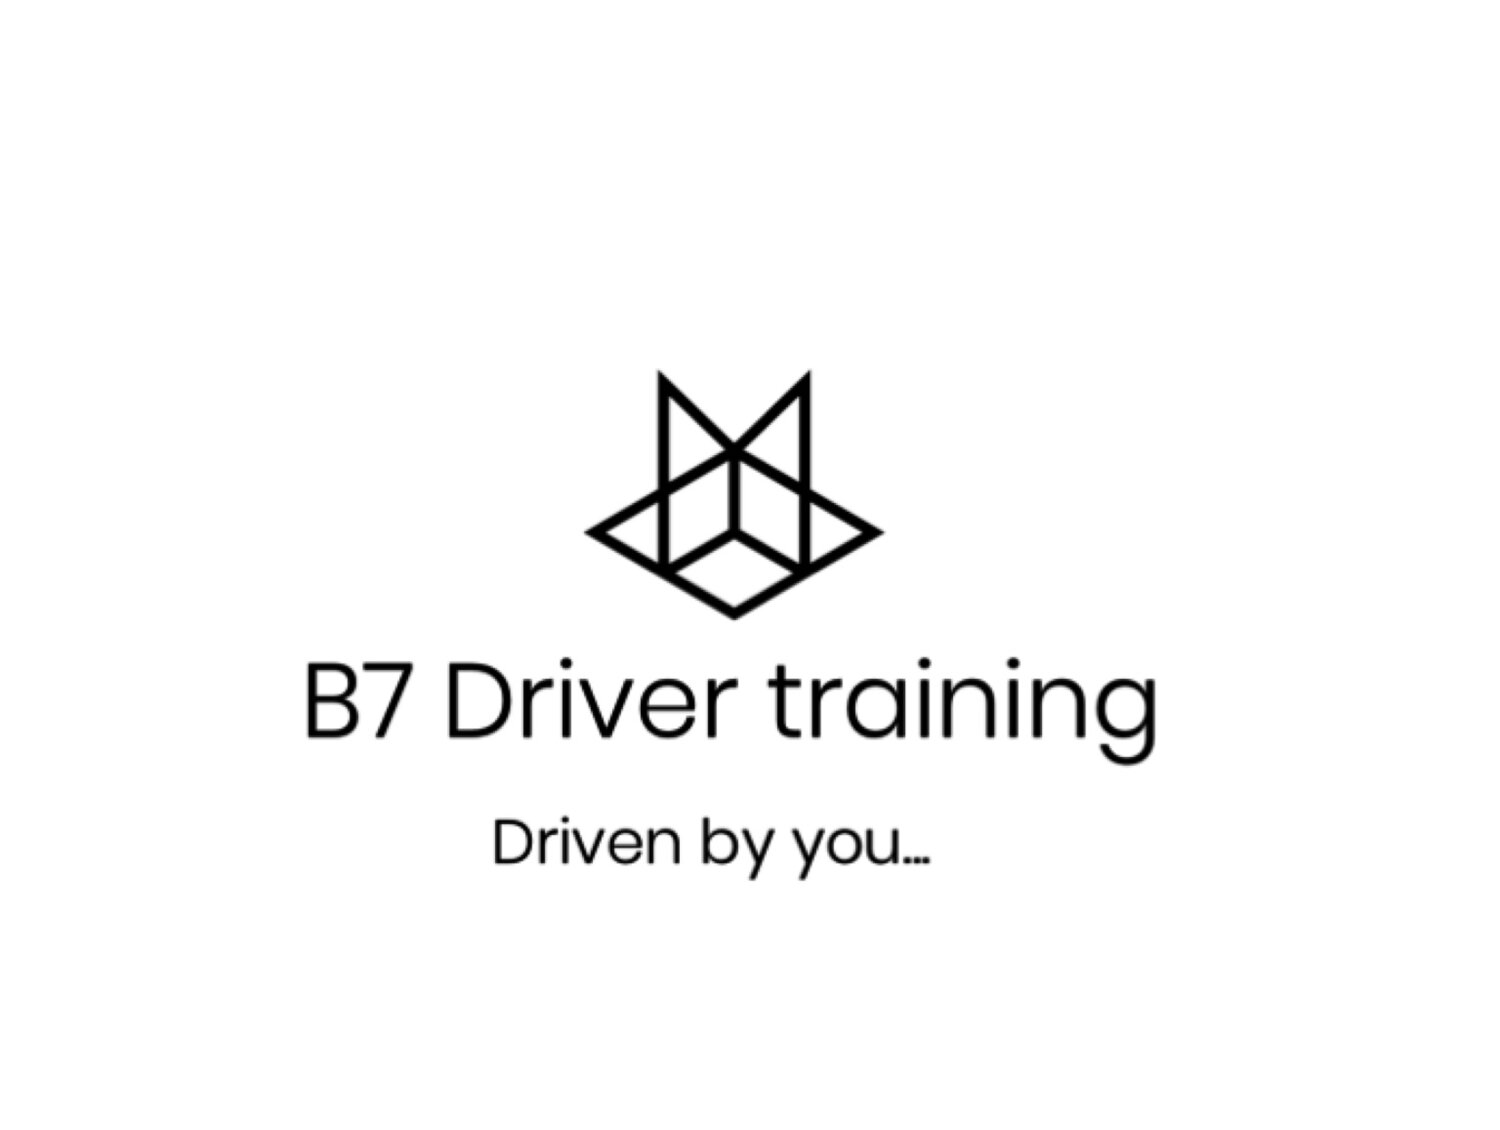 B7 DRIVER TRAINING